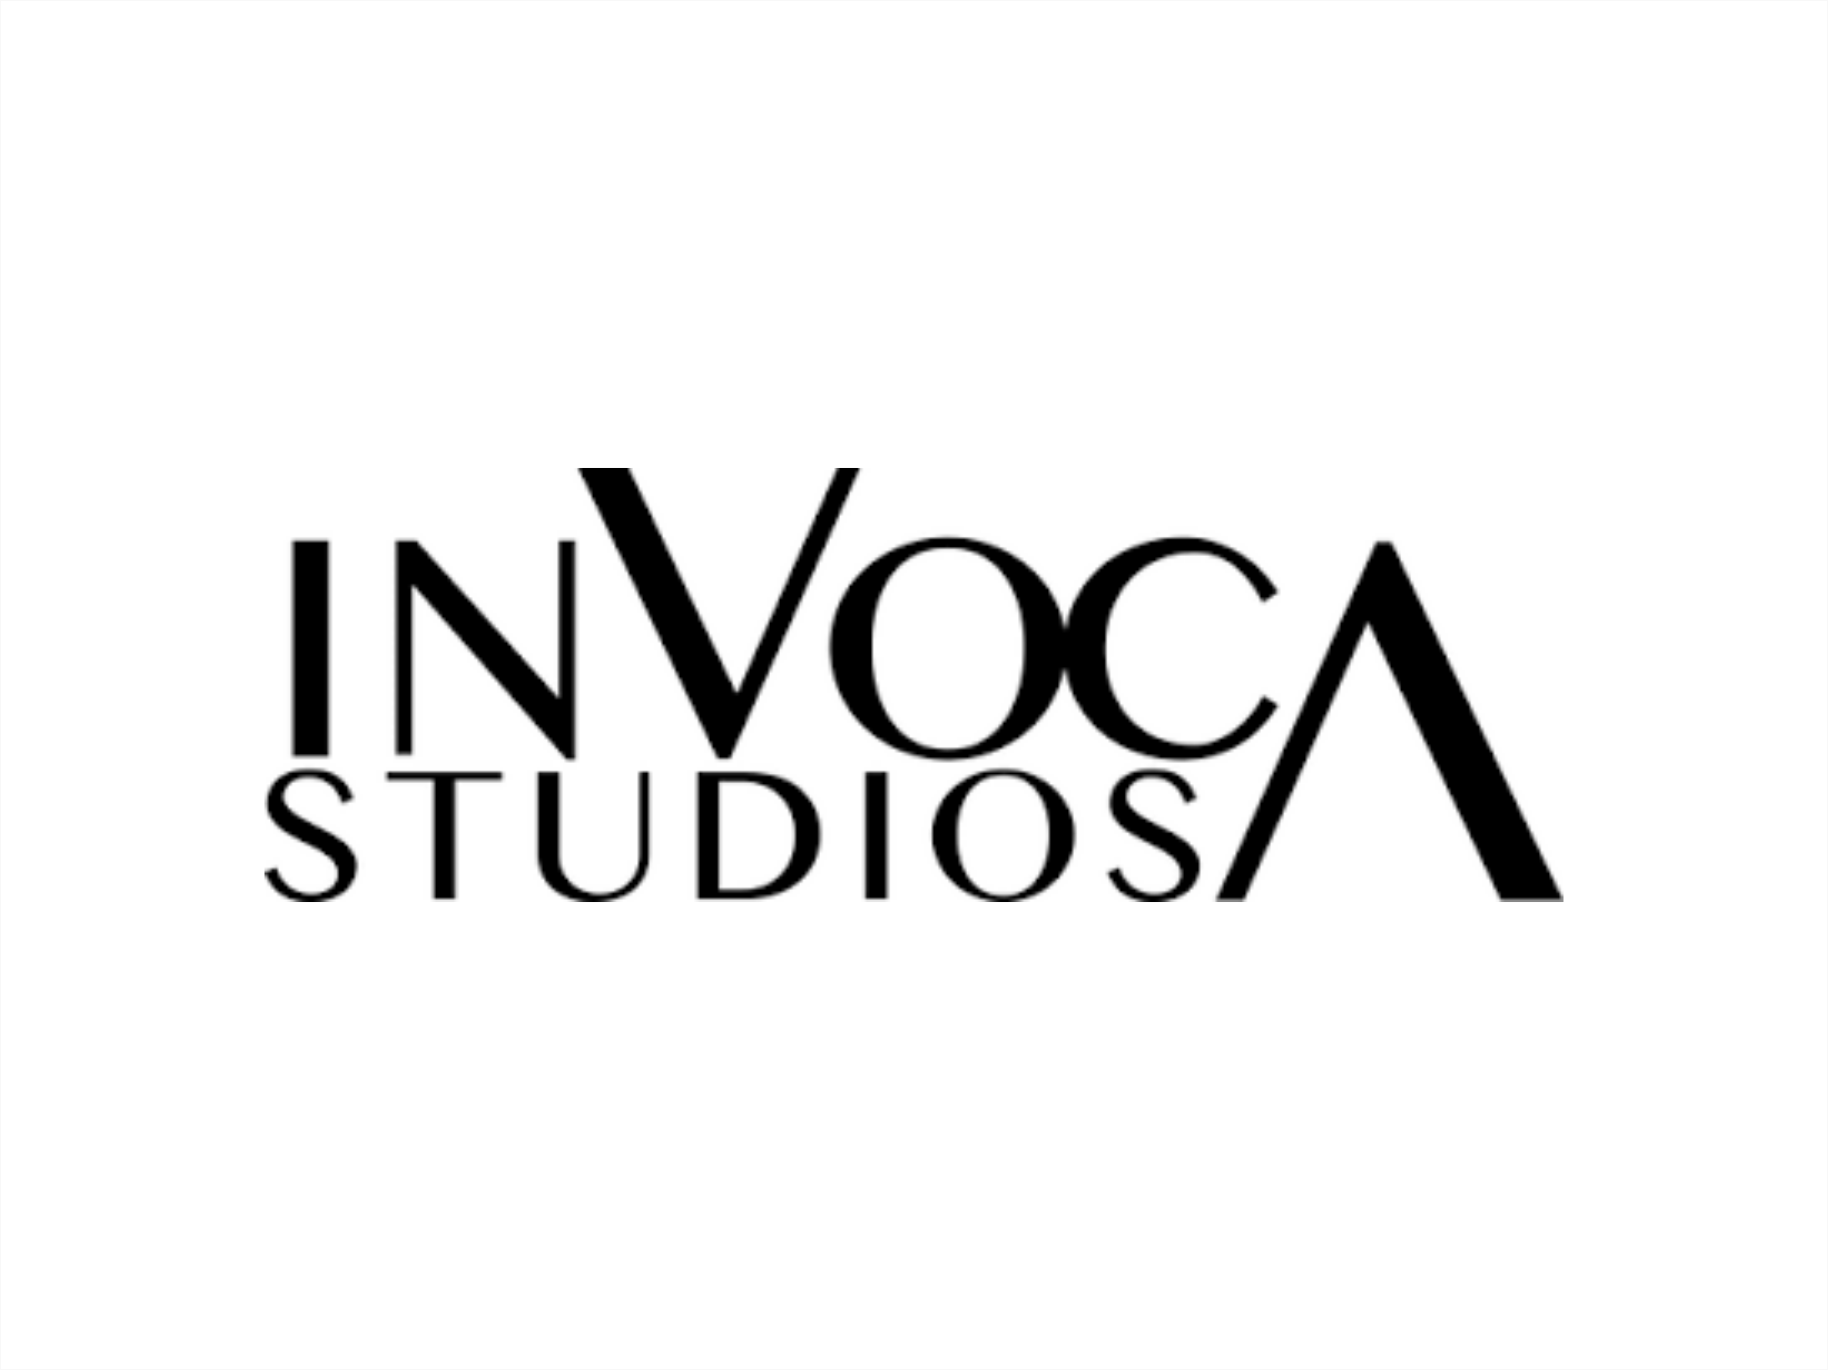 INVOCA STUDIOS